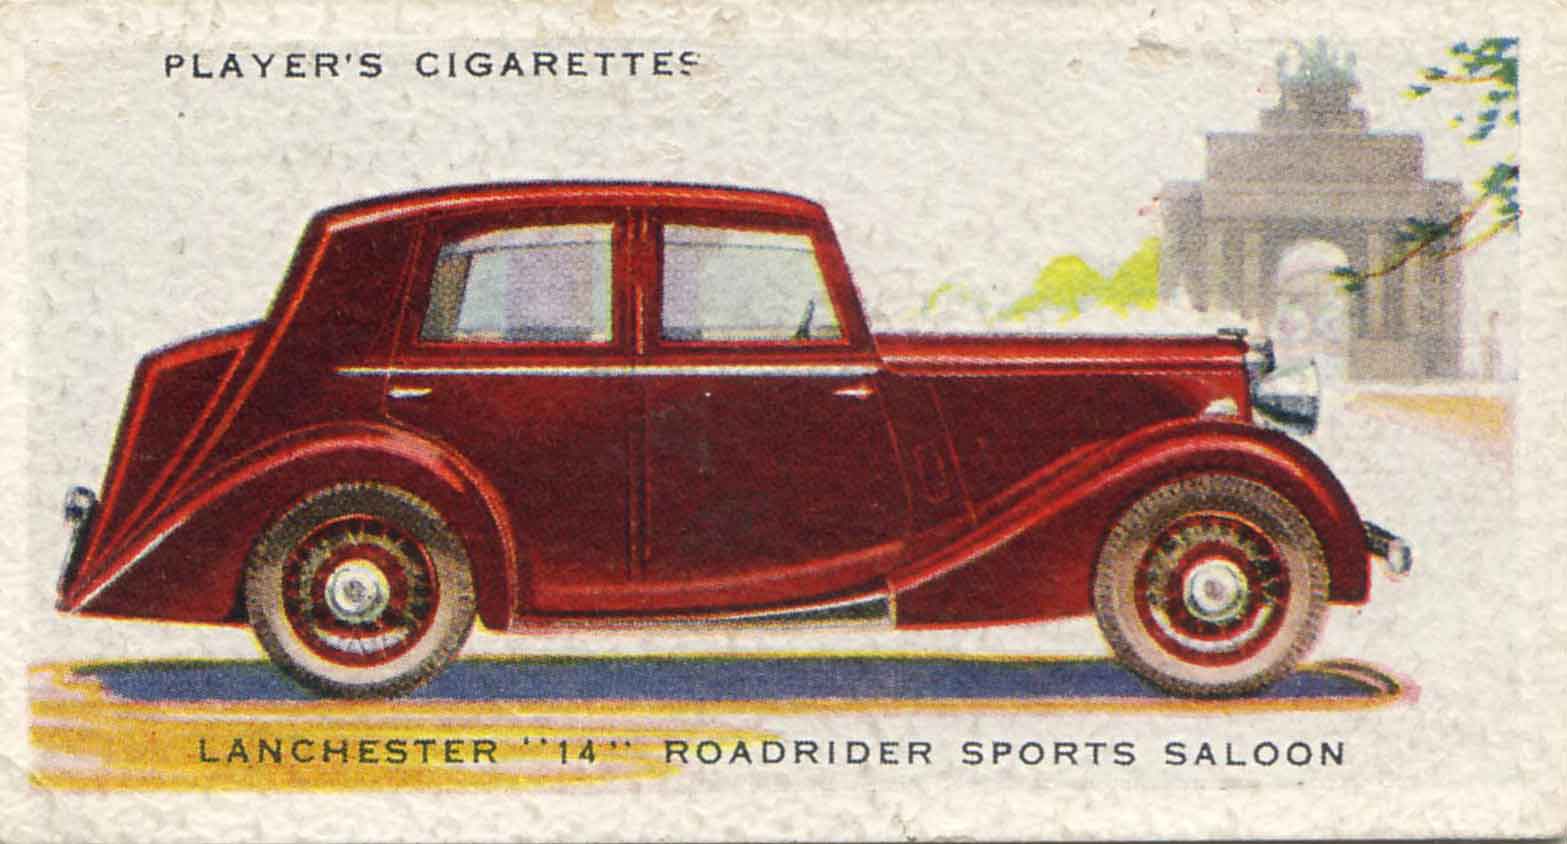 Lanchester Roadrider Sports Saloon. 1937 cigarette card.